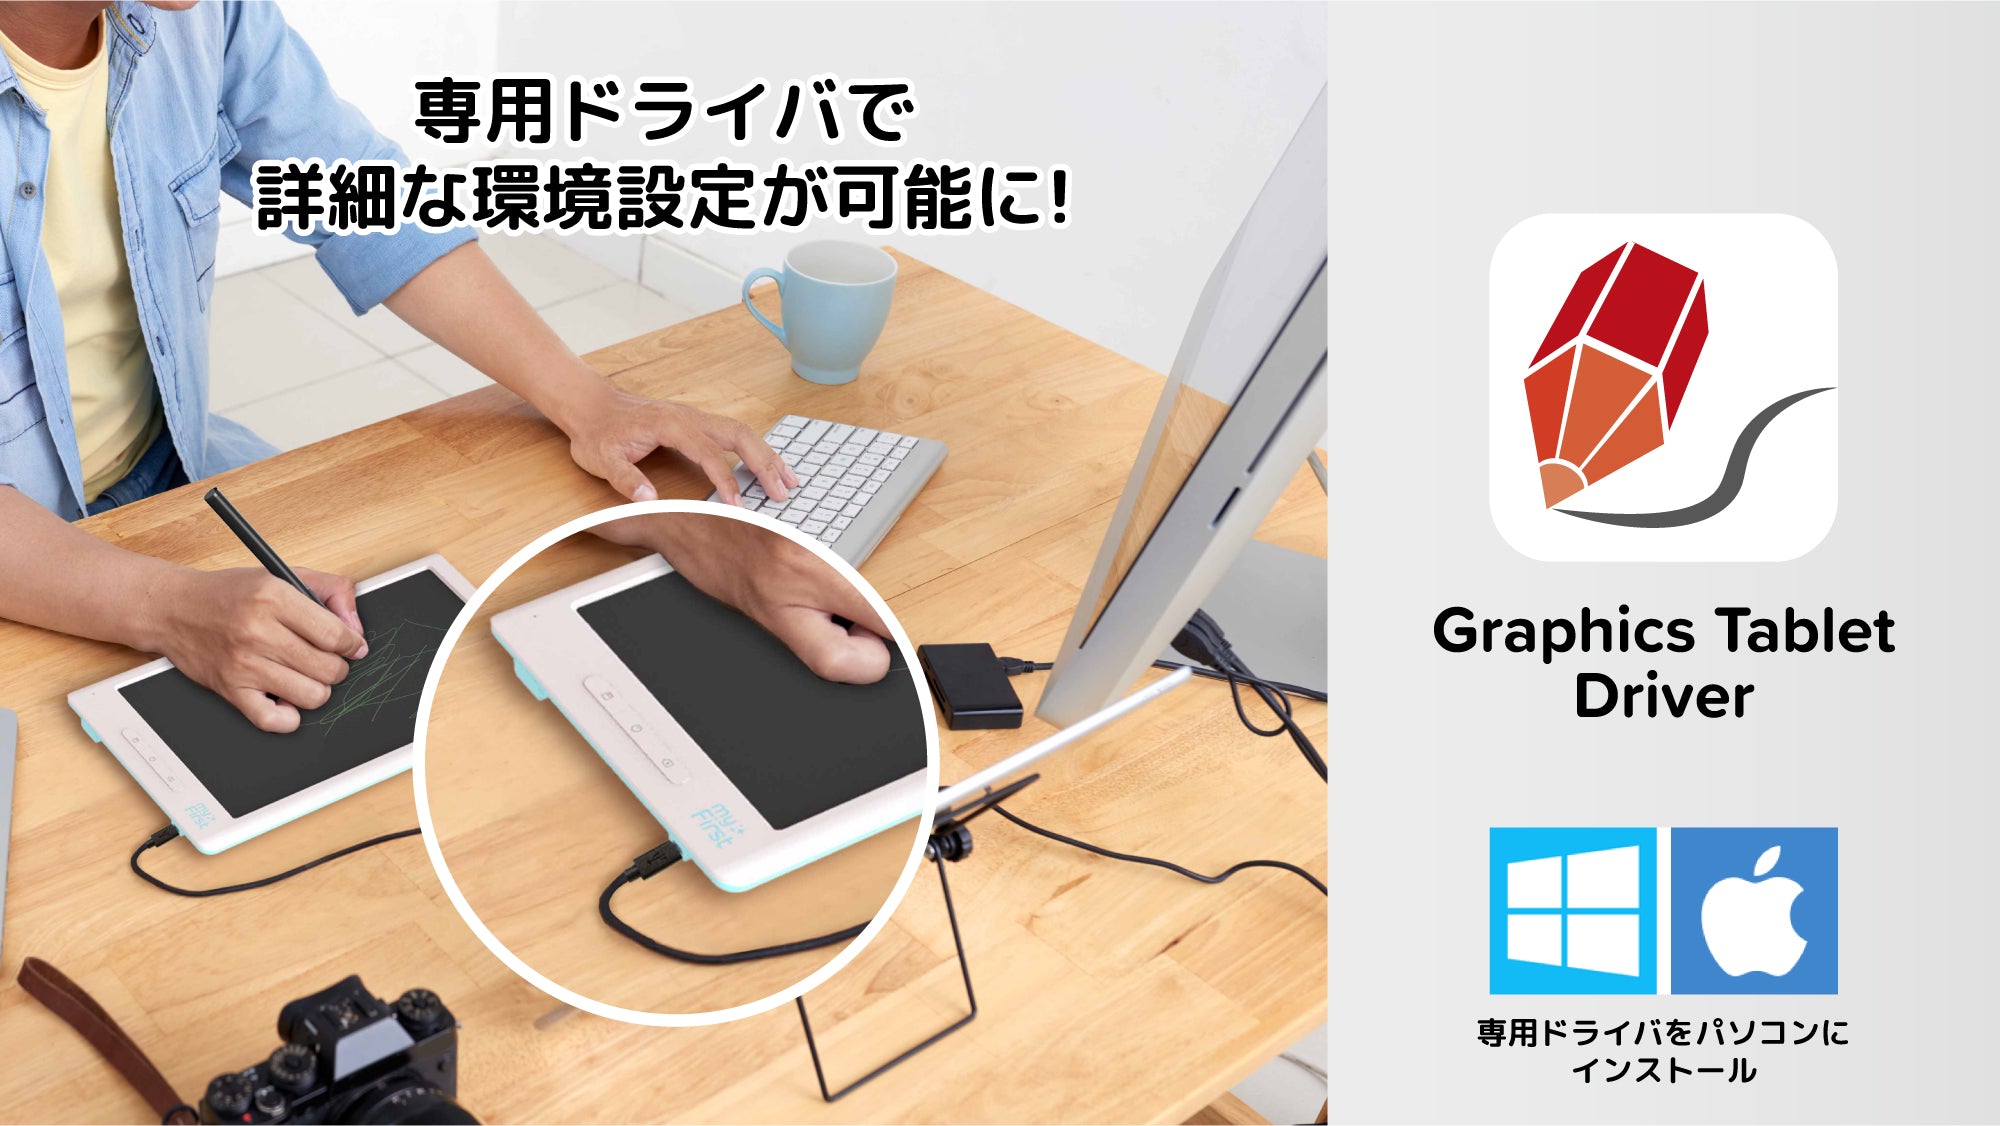 SketchBook  スケッチブック 10インチ　デジタルイラスト液晶ペンタブレット8192レベル筆圧/専用スマホアプリと連動/PCと連動/内蔵式メモリー | Oaxis Japan.